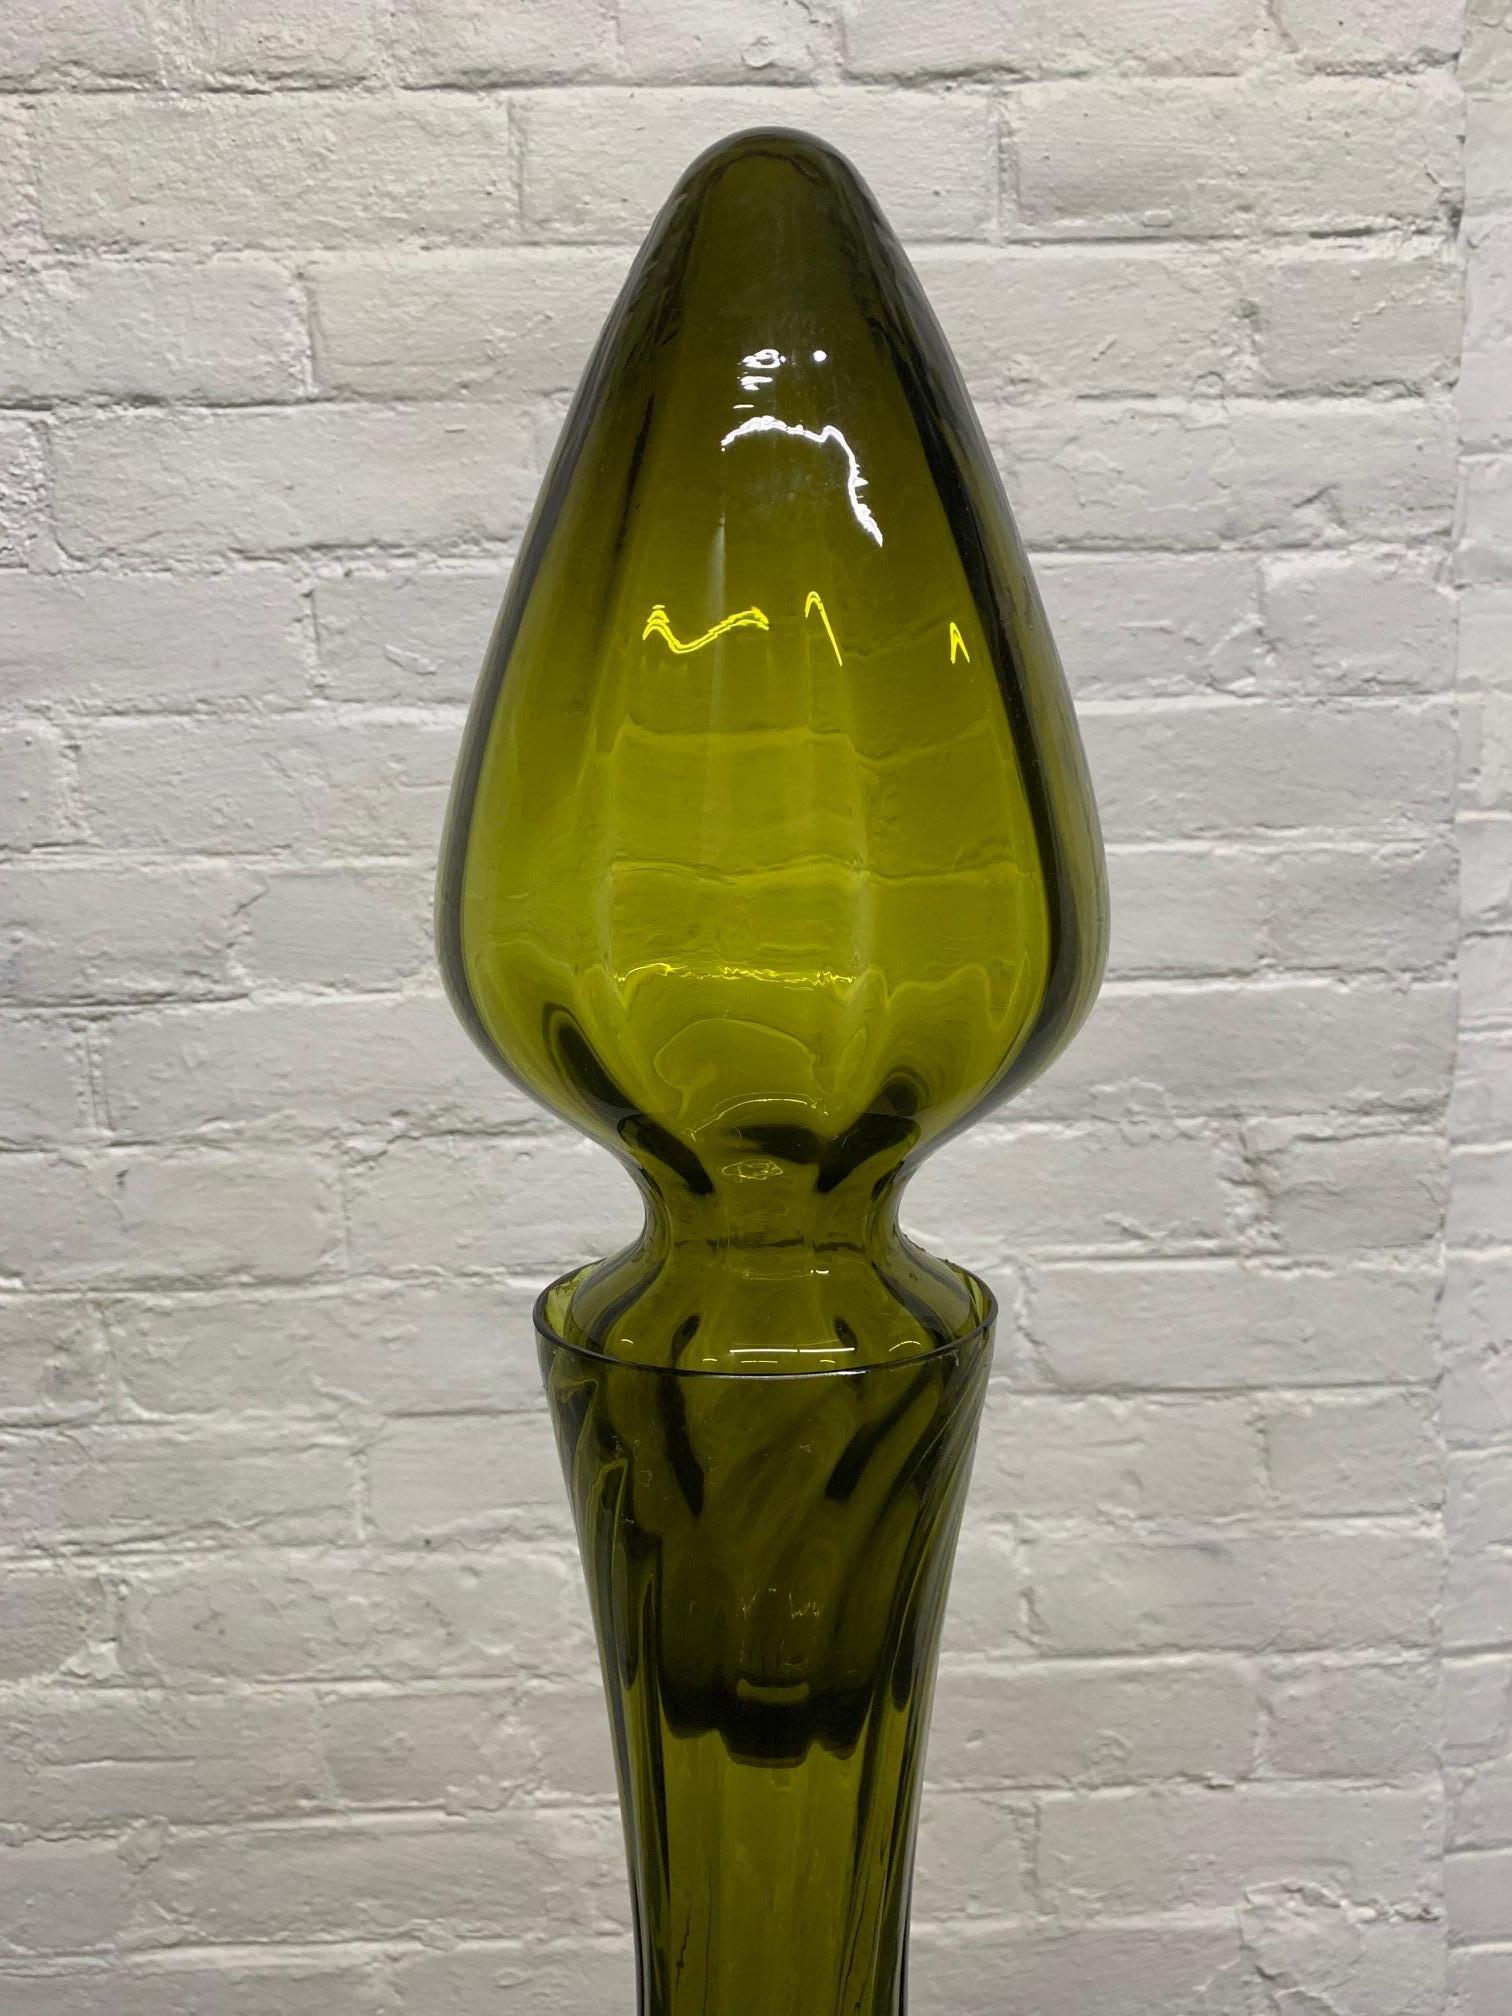 Large Empoli Art glass decanter.
Measures: 30